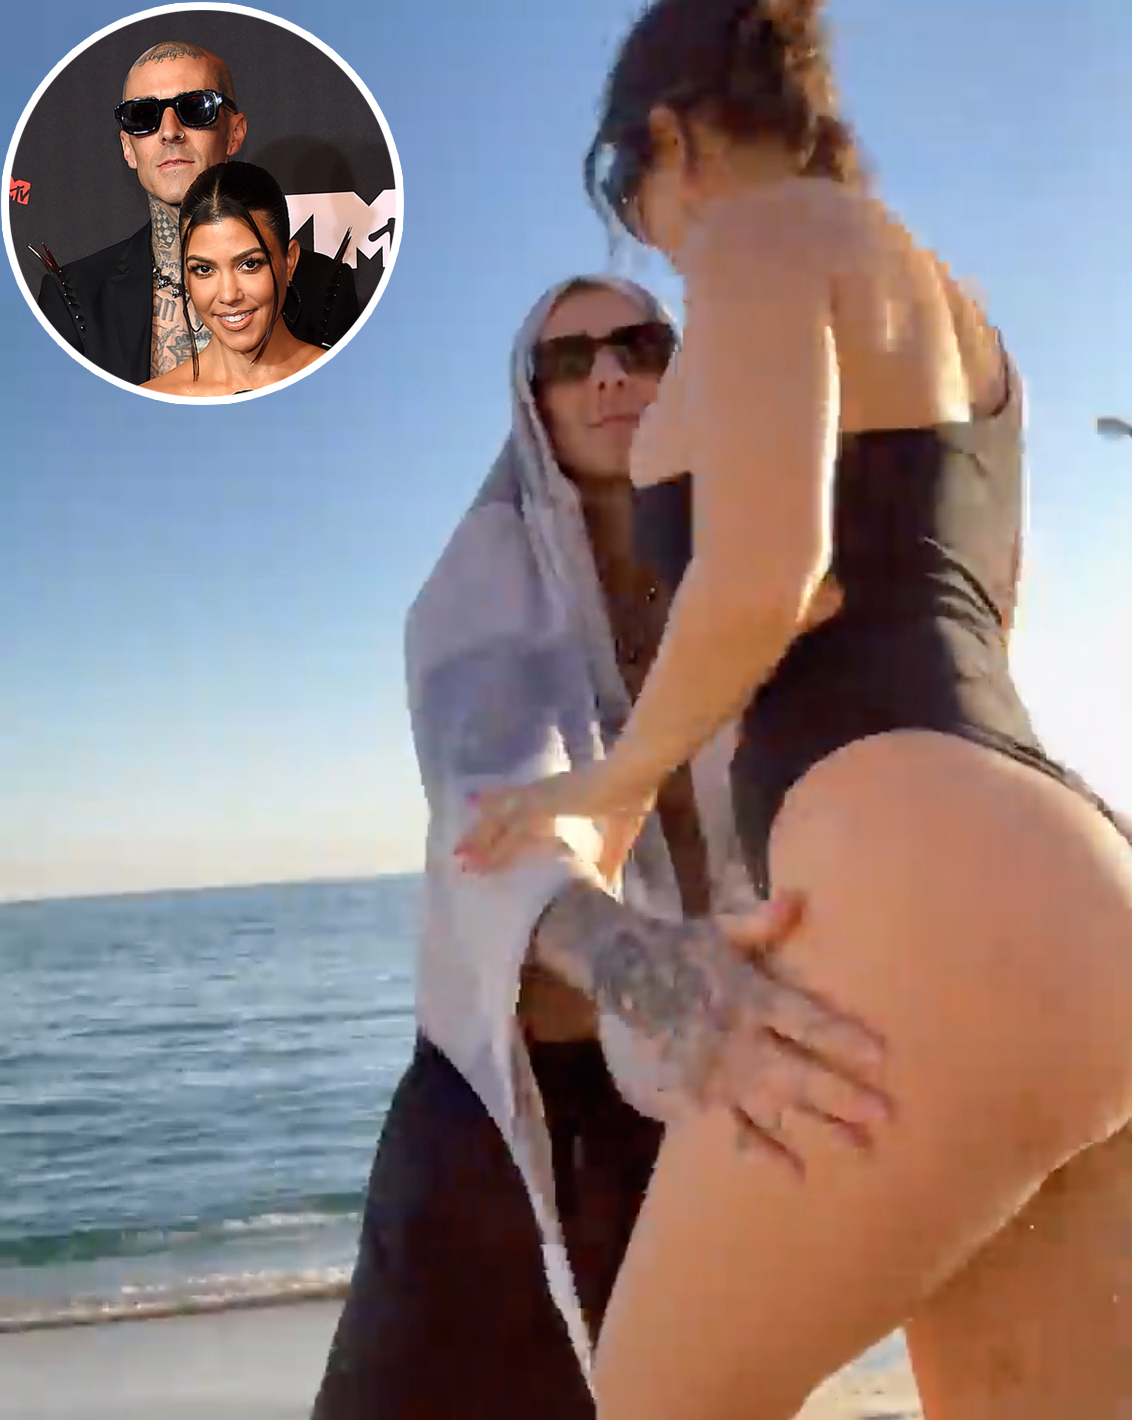 Topless Beach Tags - Travis Barker Holds Kourtney Kardashian's Bare Butt in NSFW Video